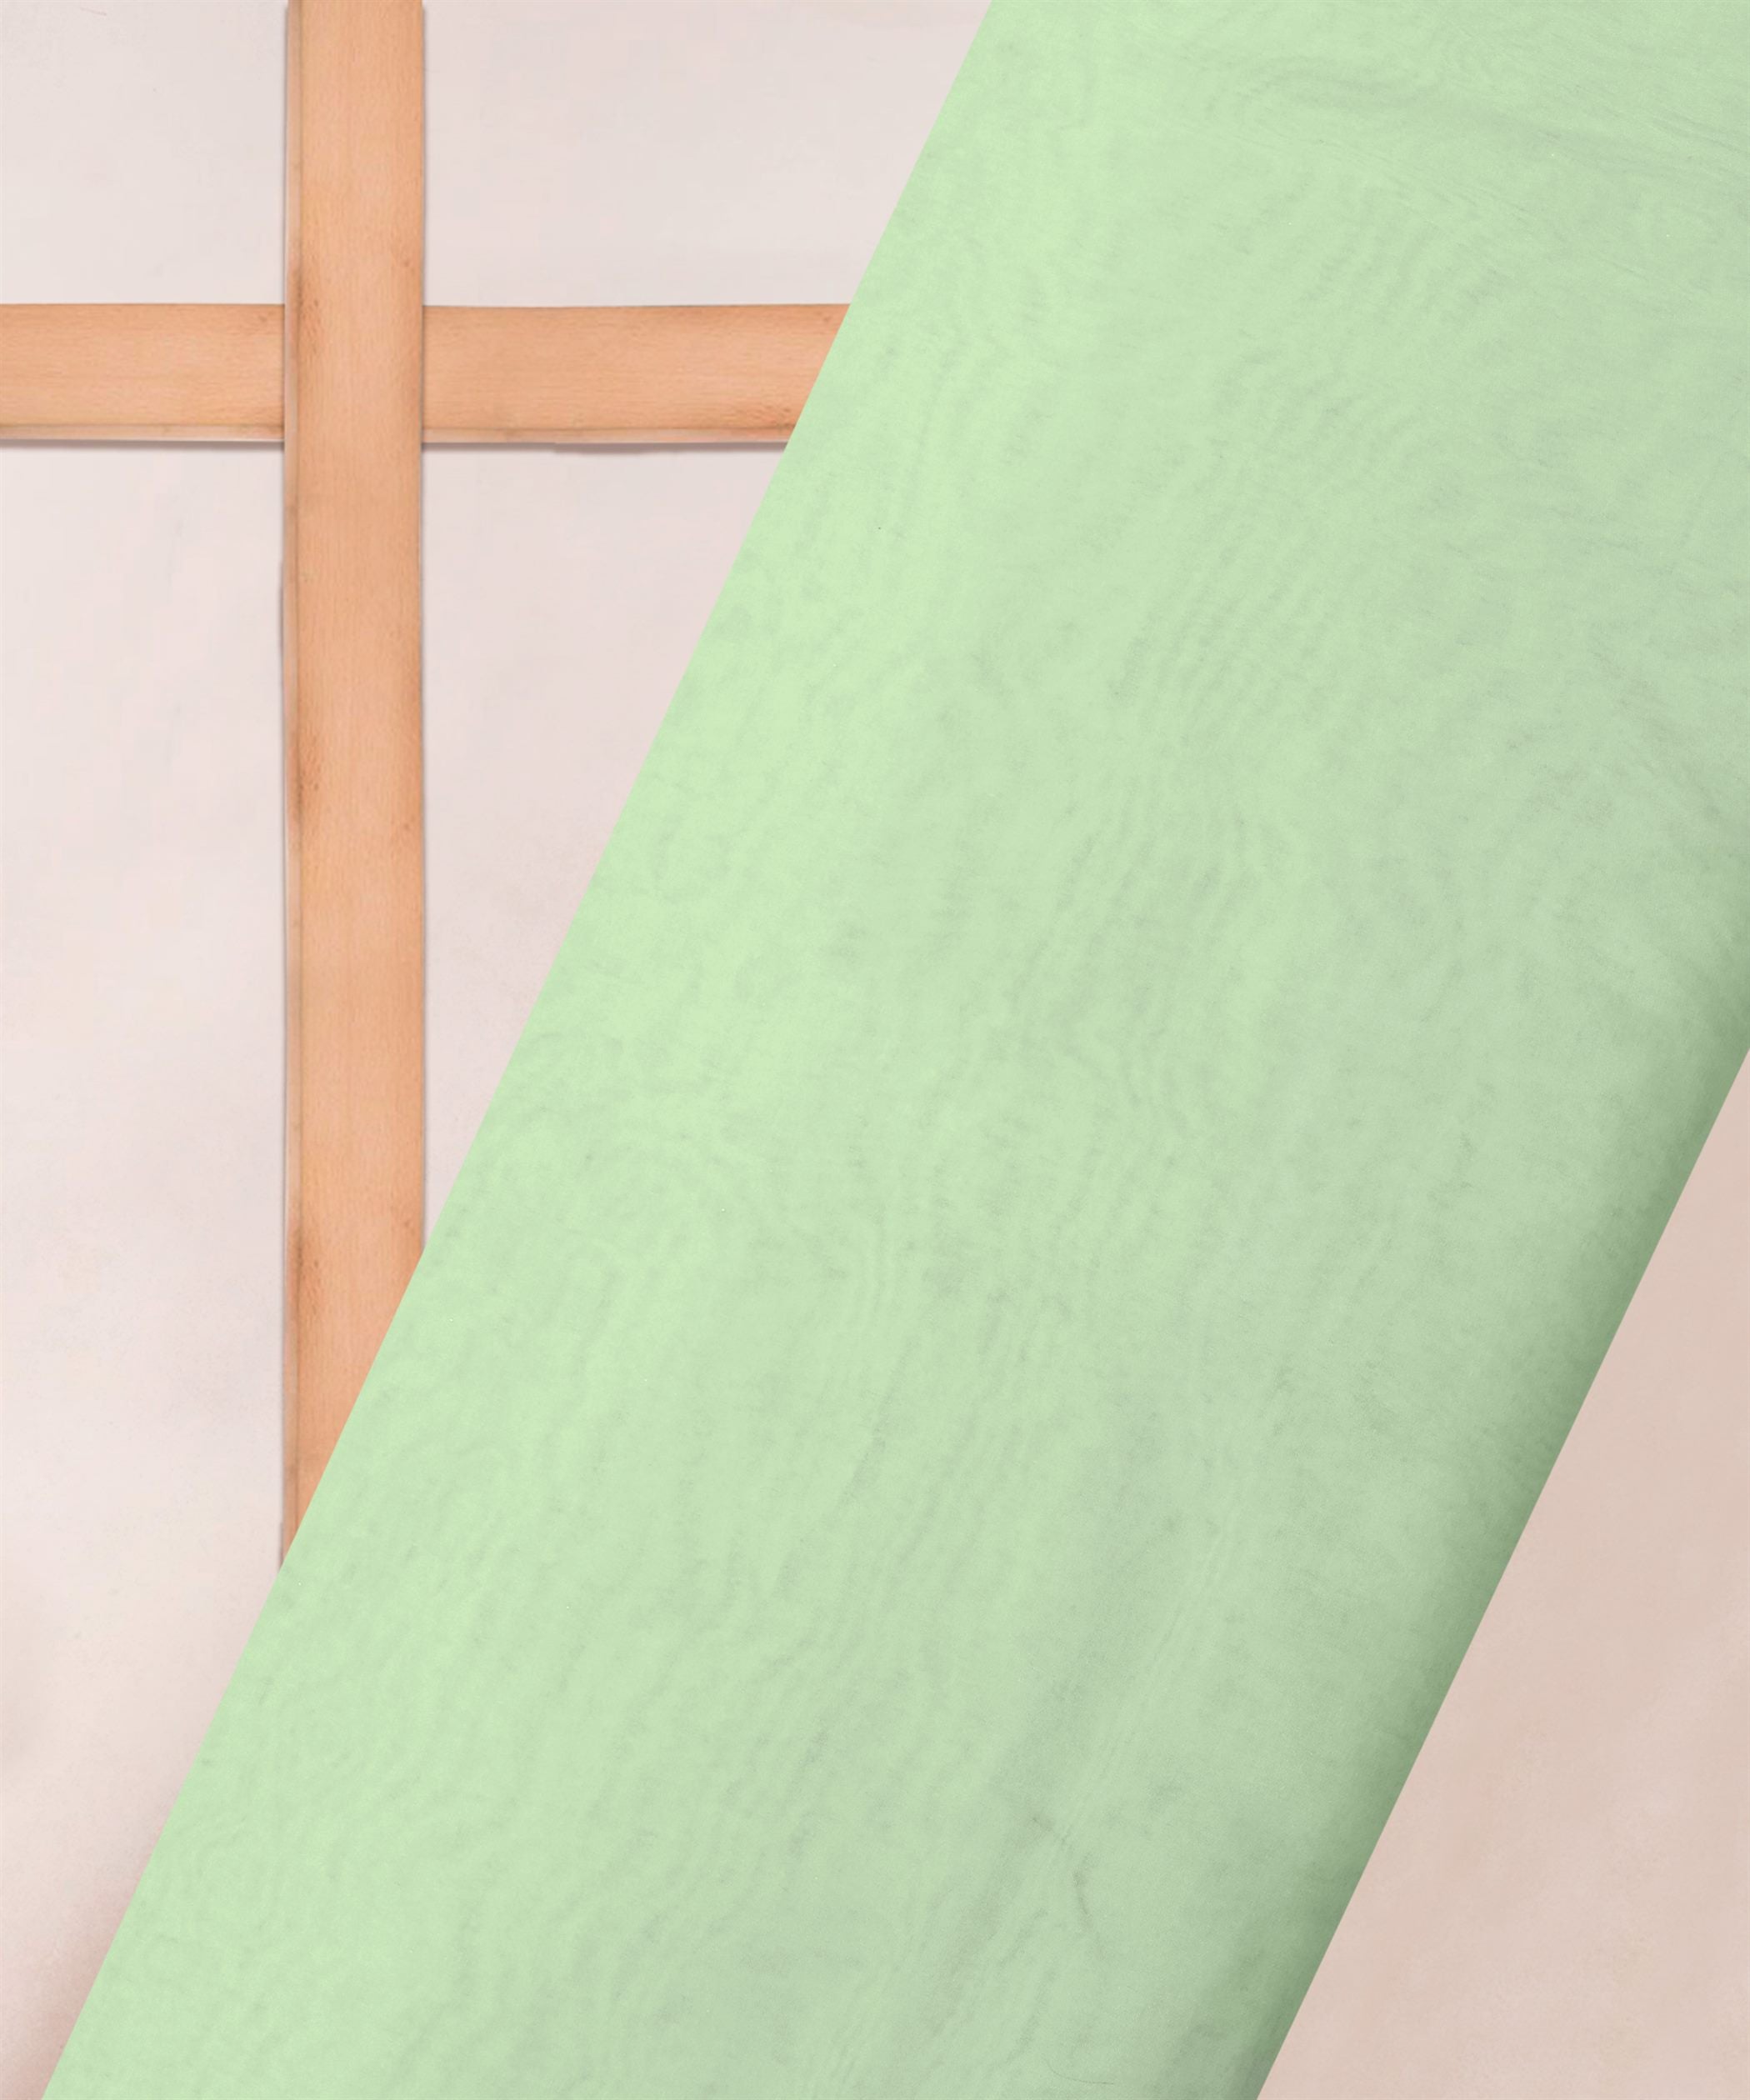 Pastel Sea Green Plain Dyed Organza Fabric